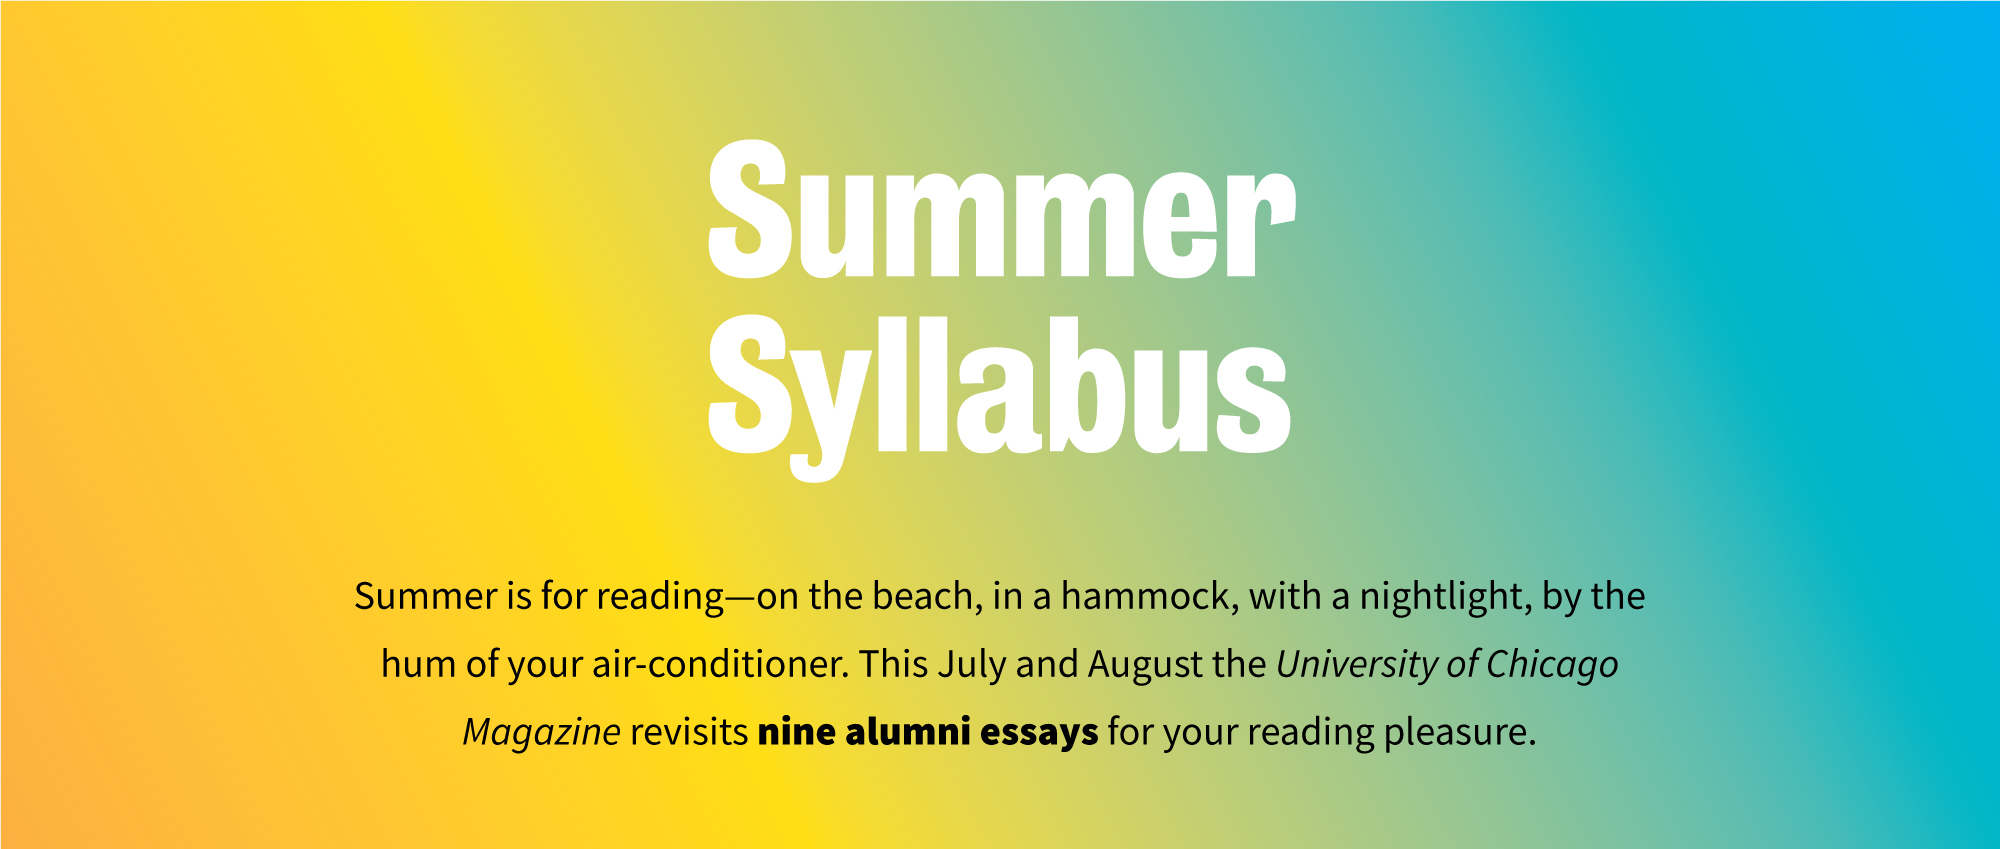 Summer Syllabus